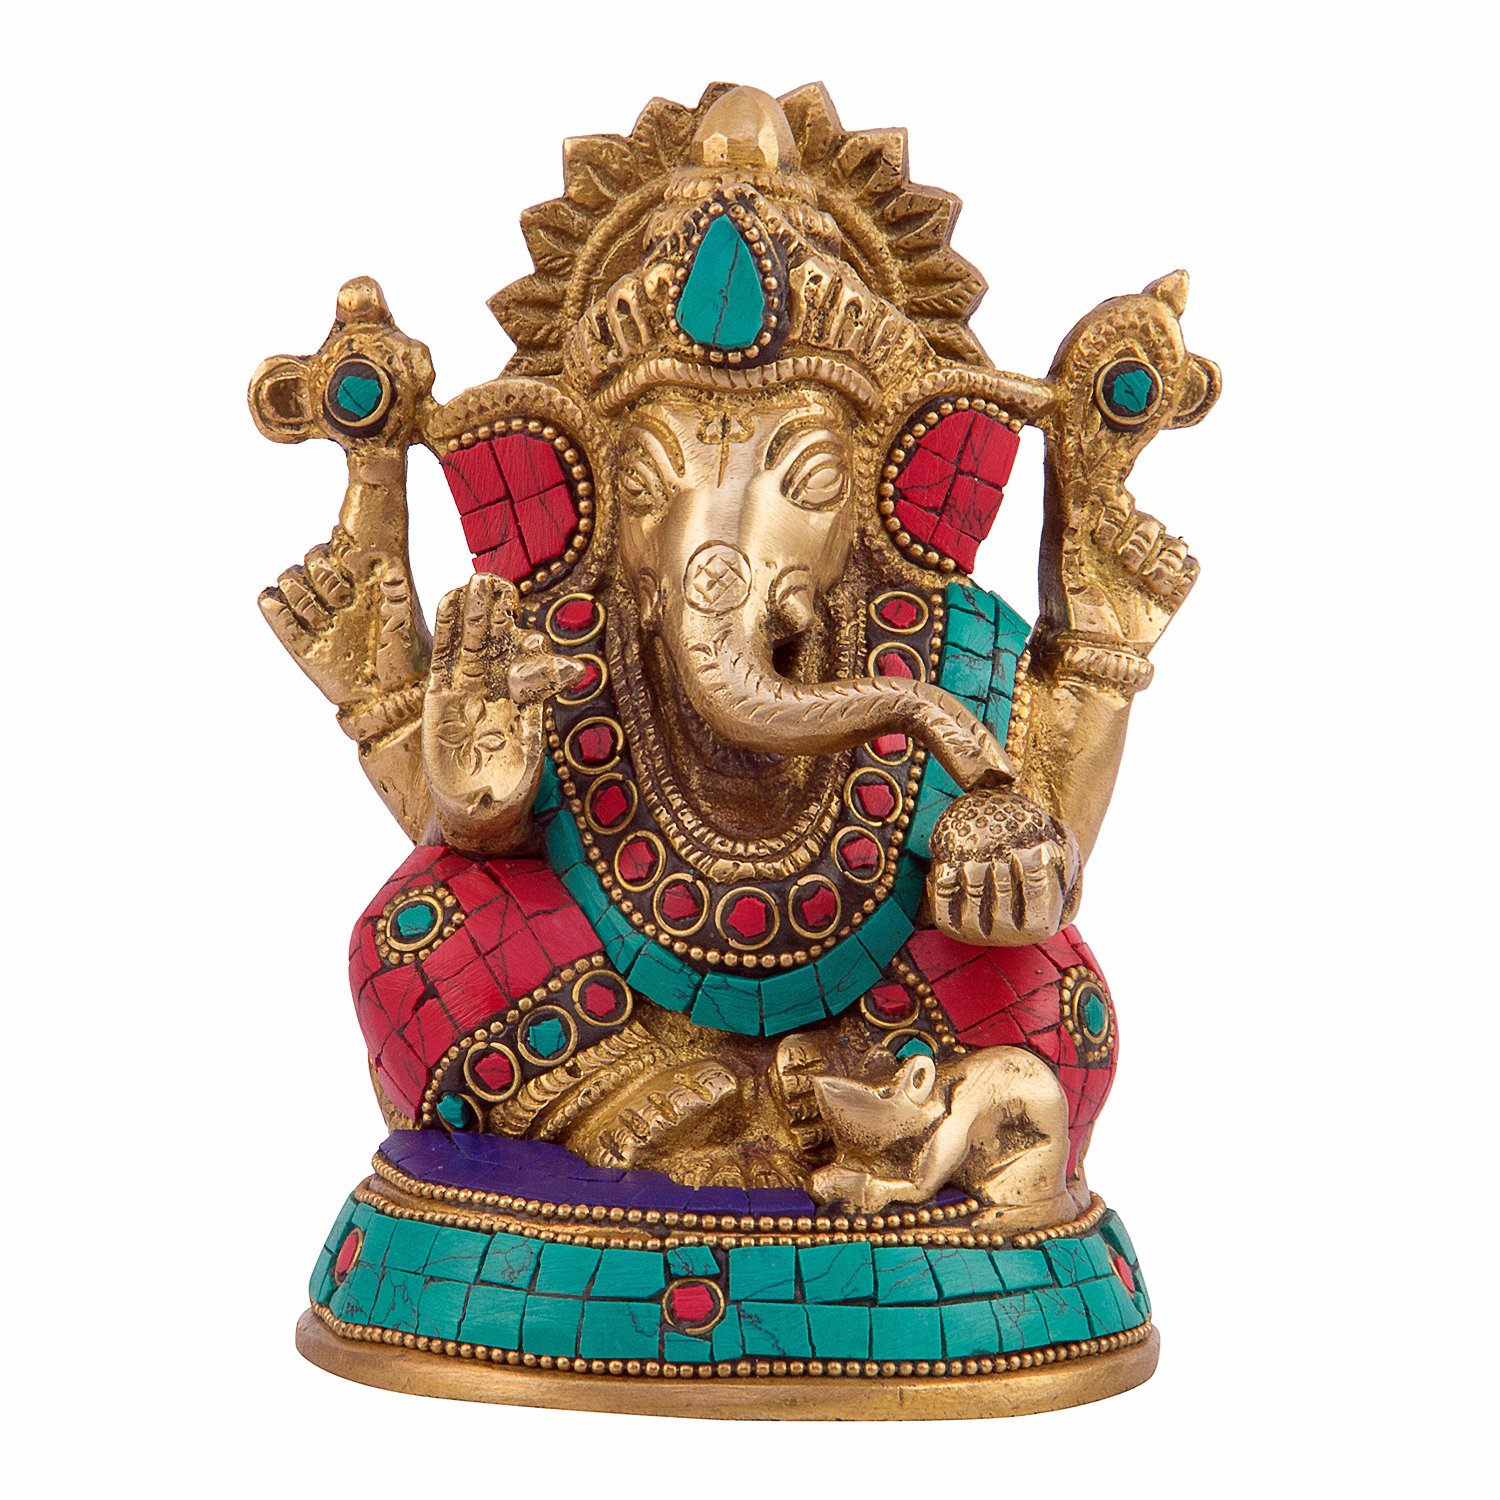 Amazon.com: KridayKraft Ganesha Metal Statue,Ganpati Murti for Pooja Room &  Decor Your Home,Office,Religious Idol Gift Article,Showpiece Figunrines. :  Home & Kitchen